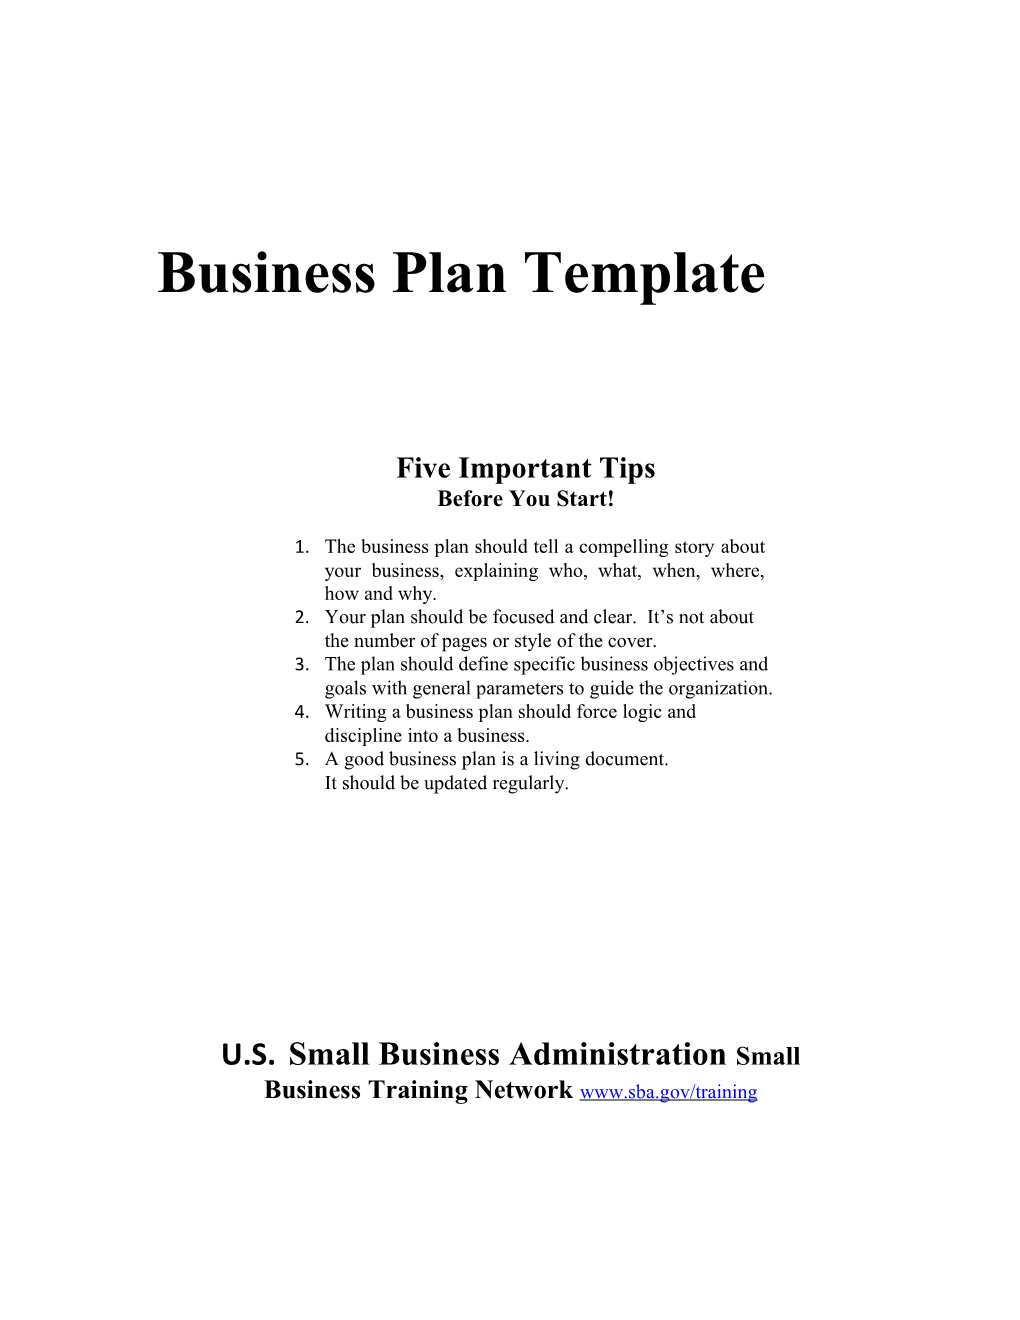 Sbtnbusiness Plan Templat1 Course